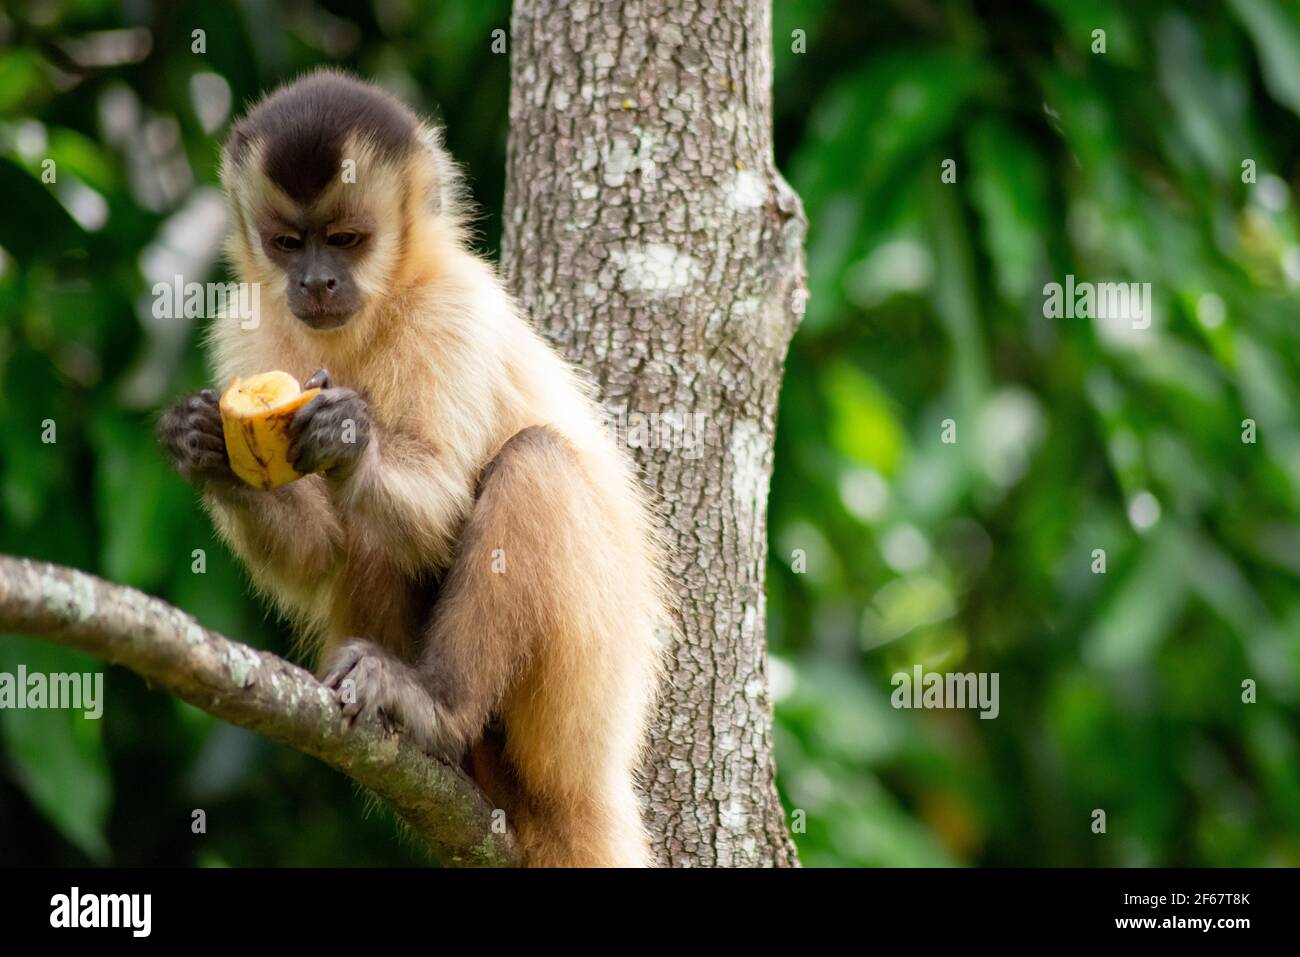 Capuchin monkey in the jungle Stock Photo